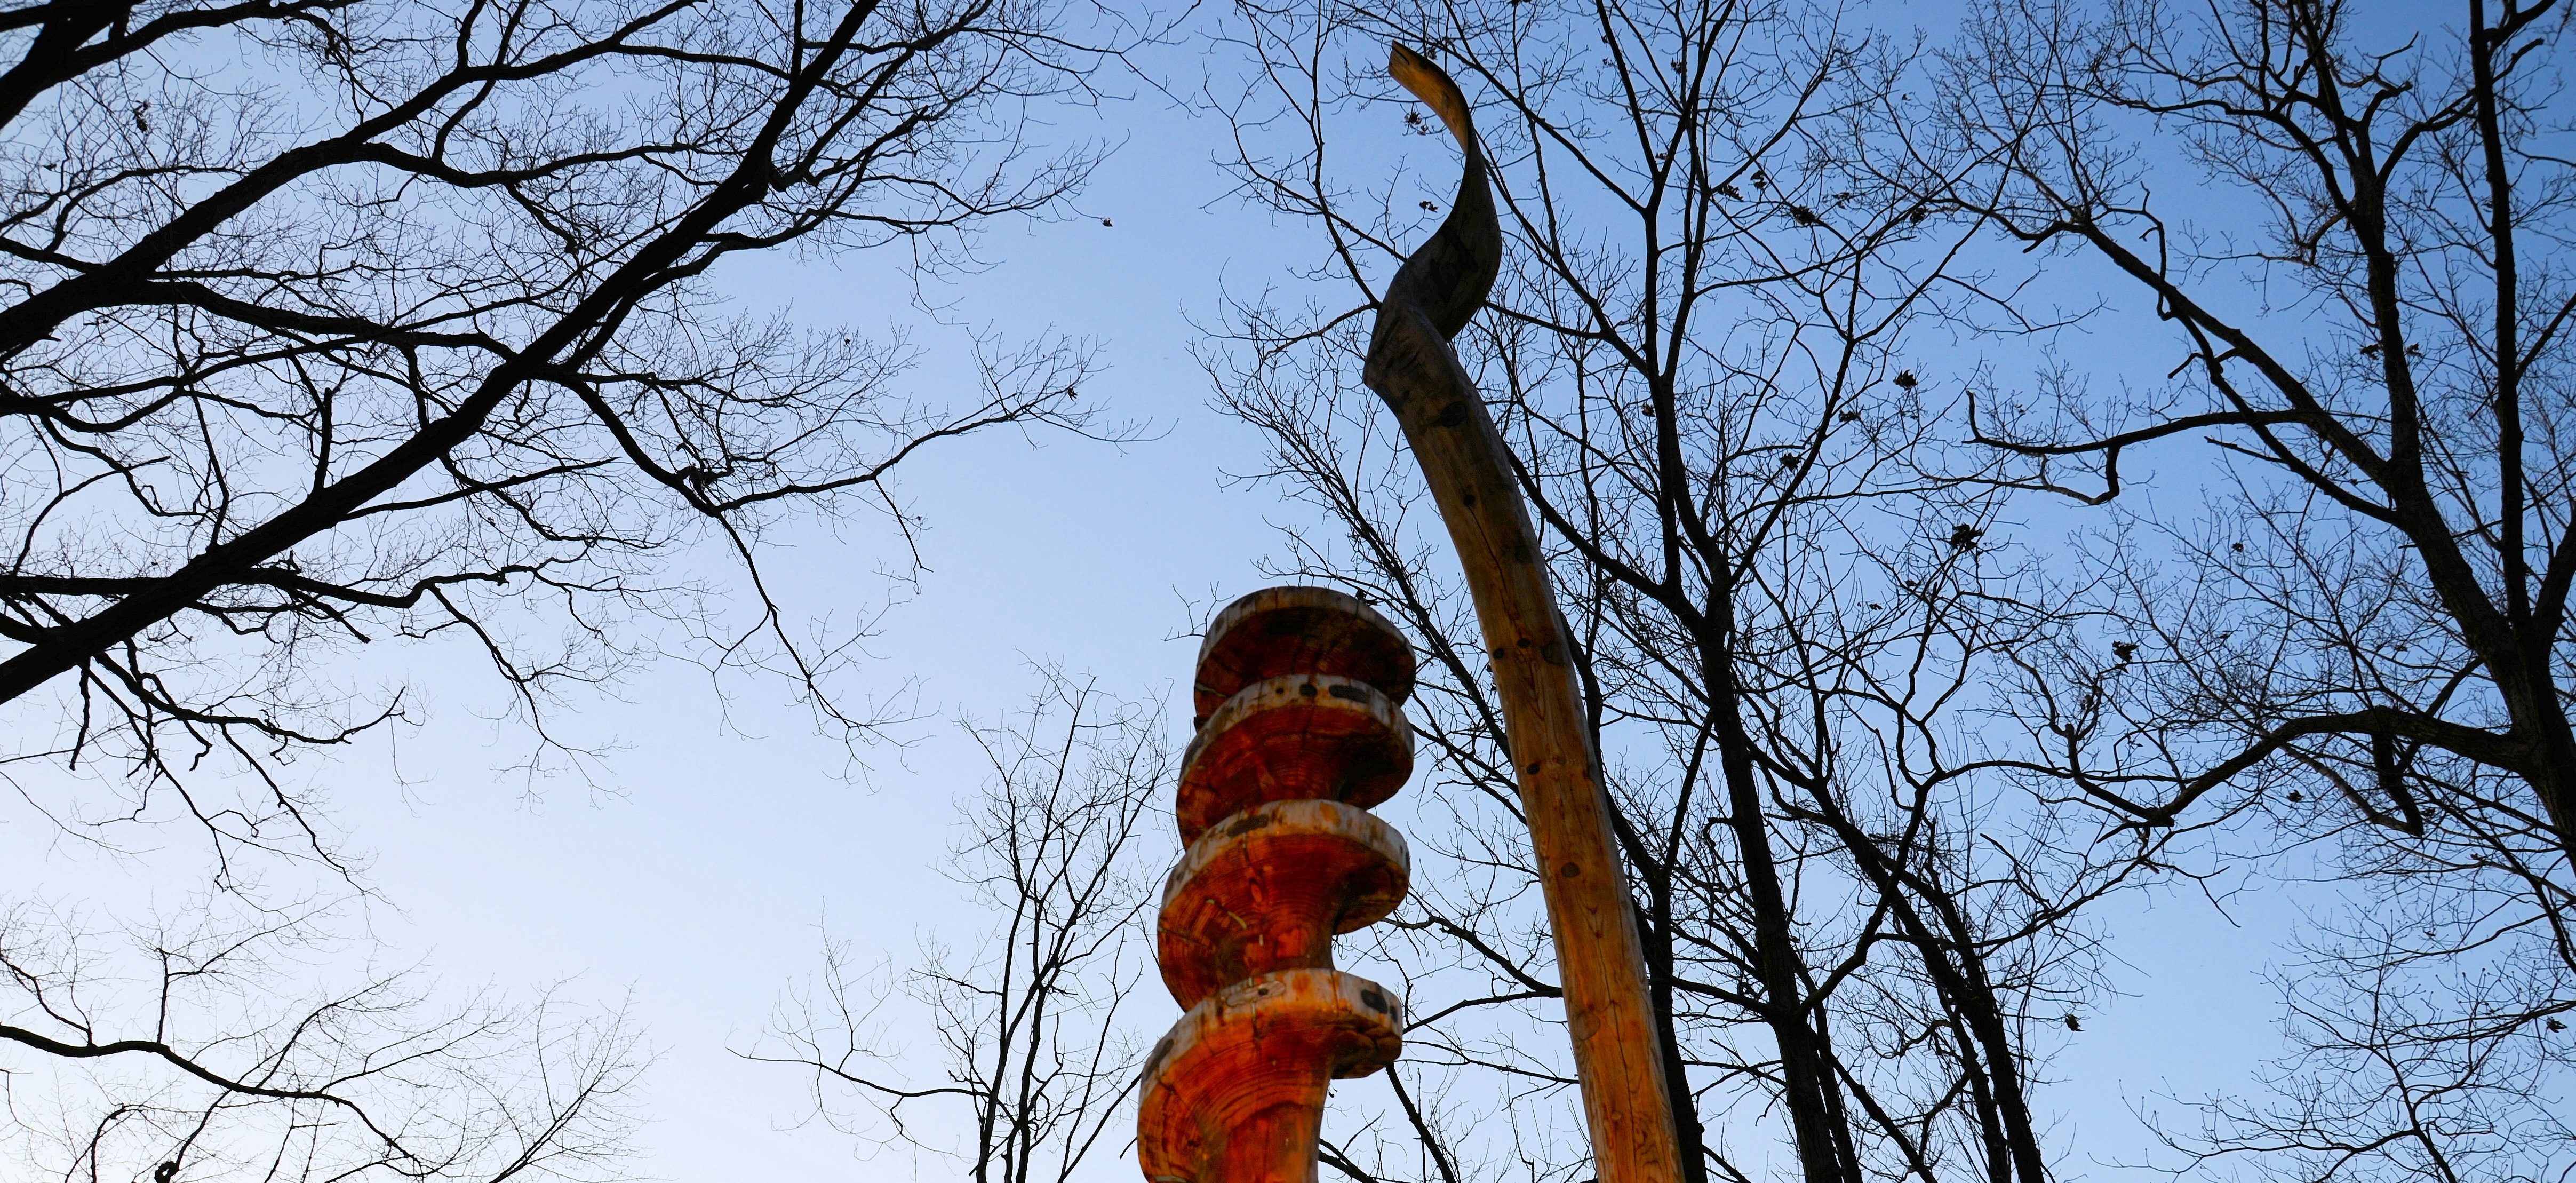 The Nobori sculpture The Bushkill Curtain installation dips into Bushkill Creek on the Karl Stirner Arts Trail